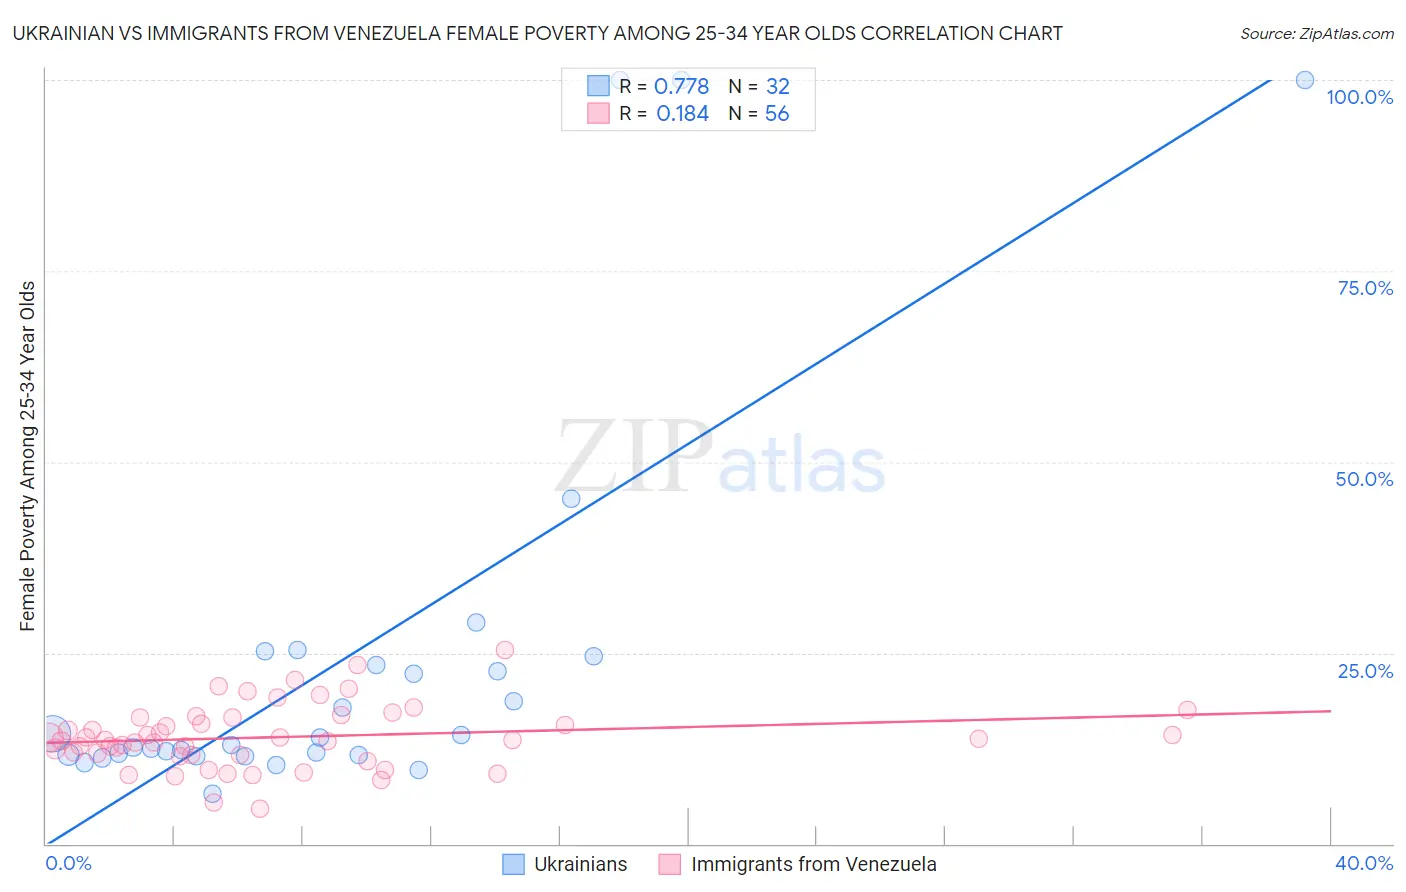 Ukrainian vs Immigrants from Venezuela Female Poverty Among 25-34 Year Olds